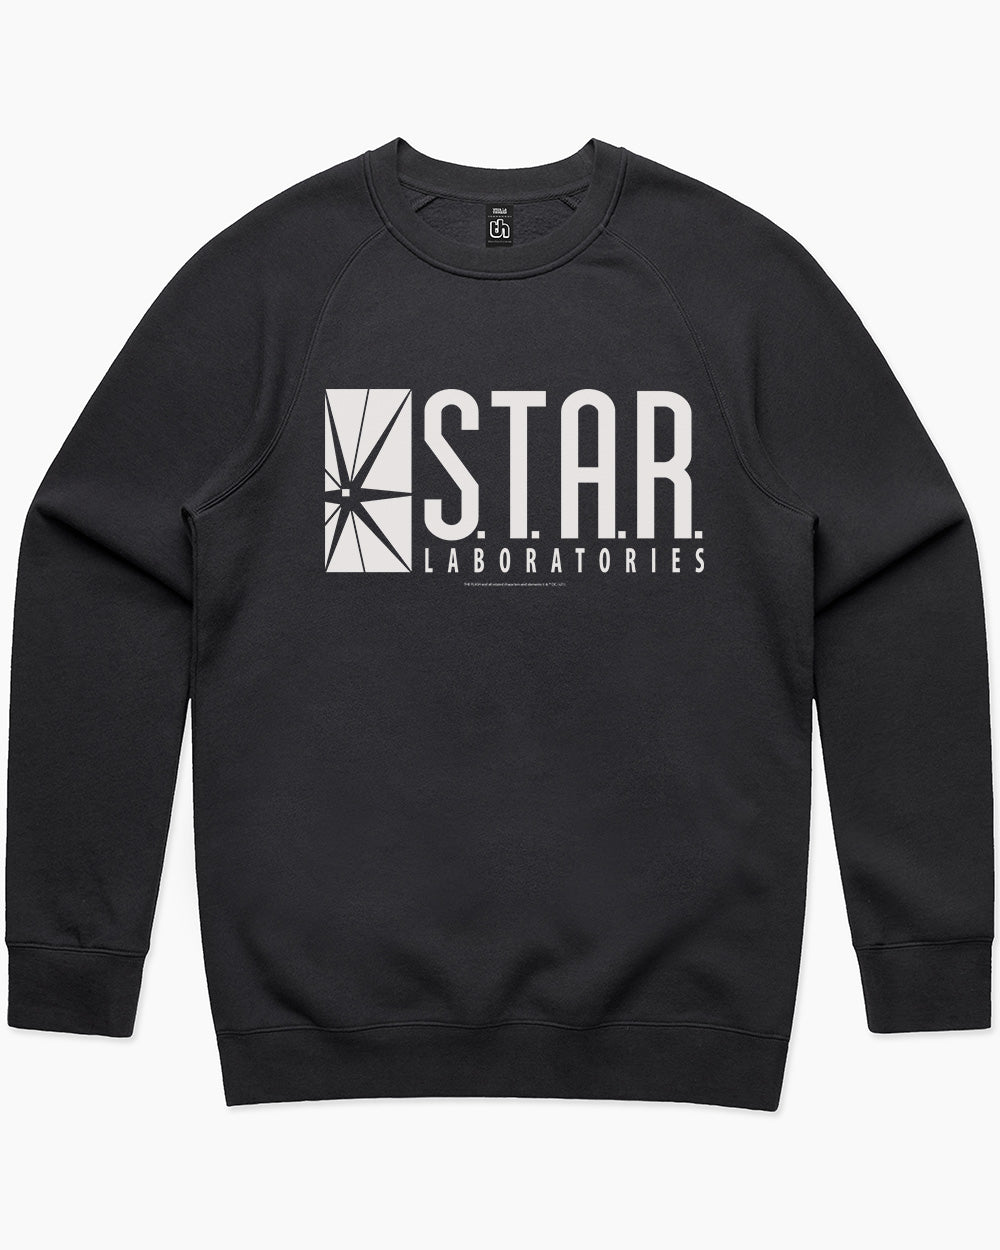 Star Laboratories Sweater Australia Online #colour_black